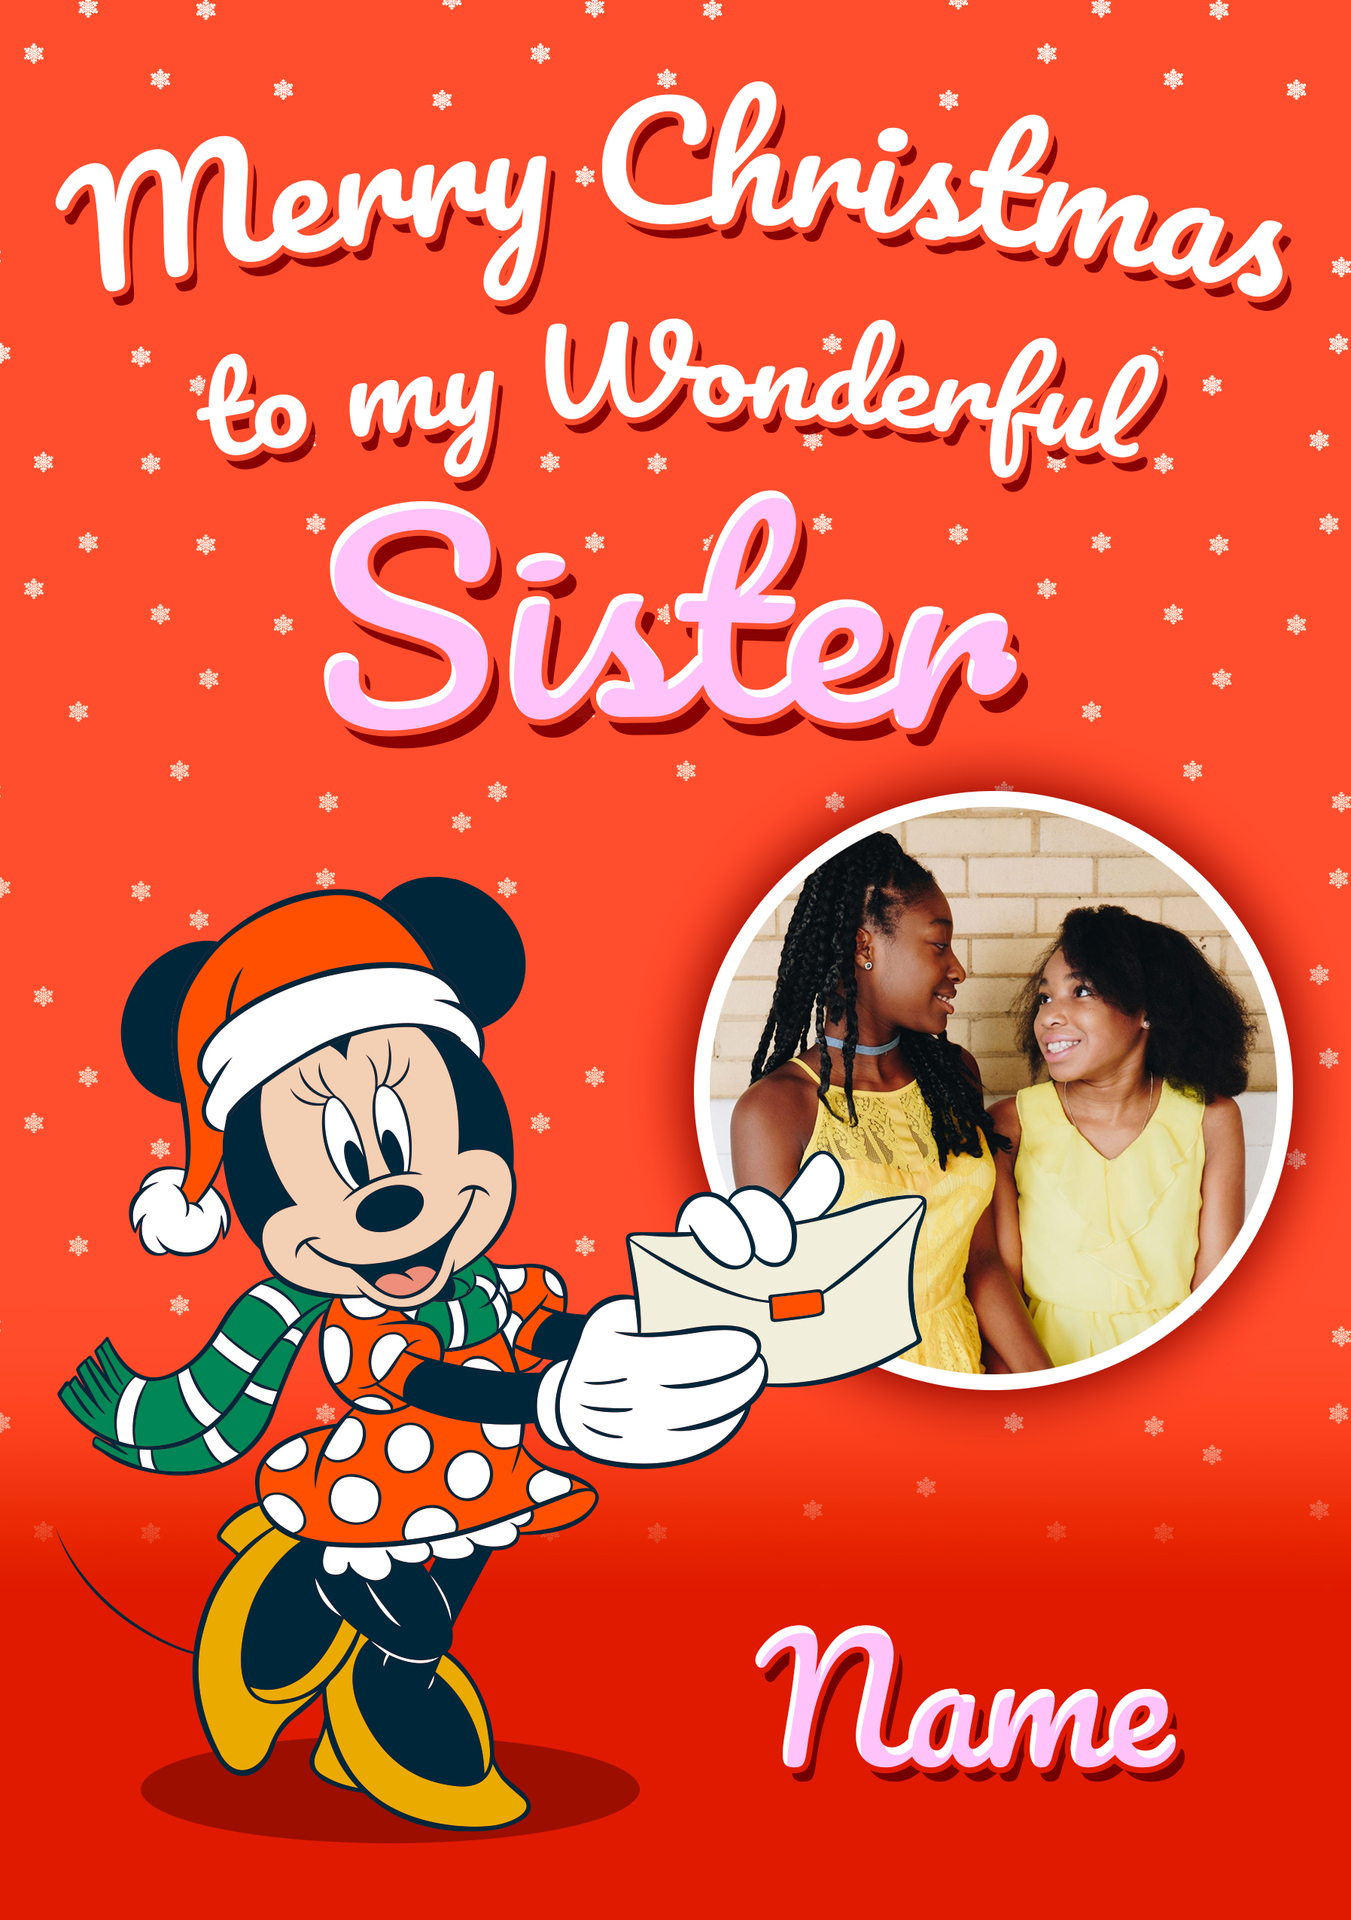 Wonderful Sister Minnie Mouse Photo Christmas Card